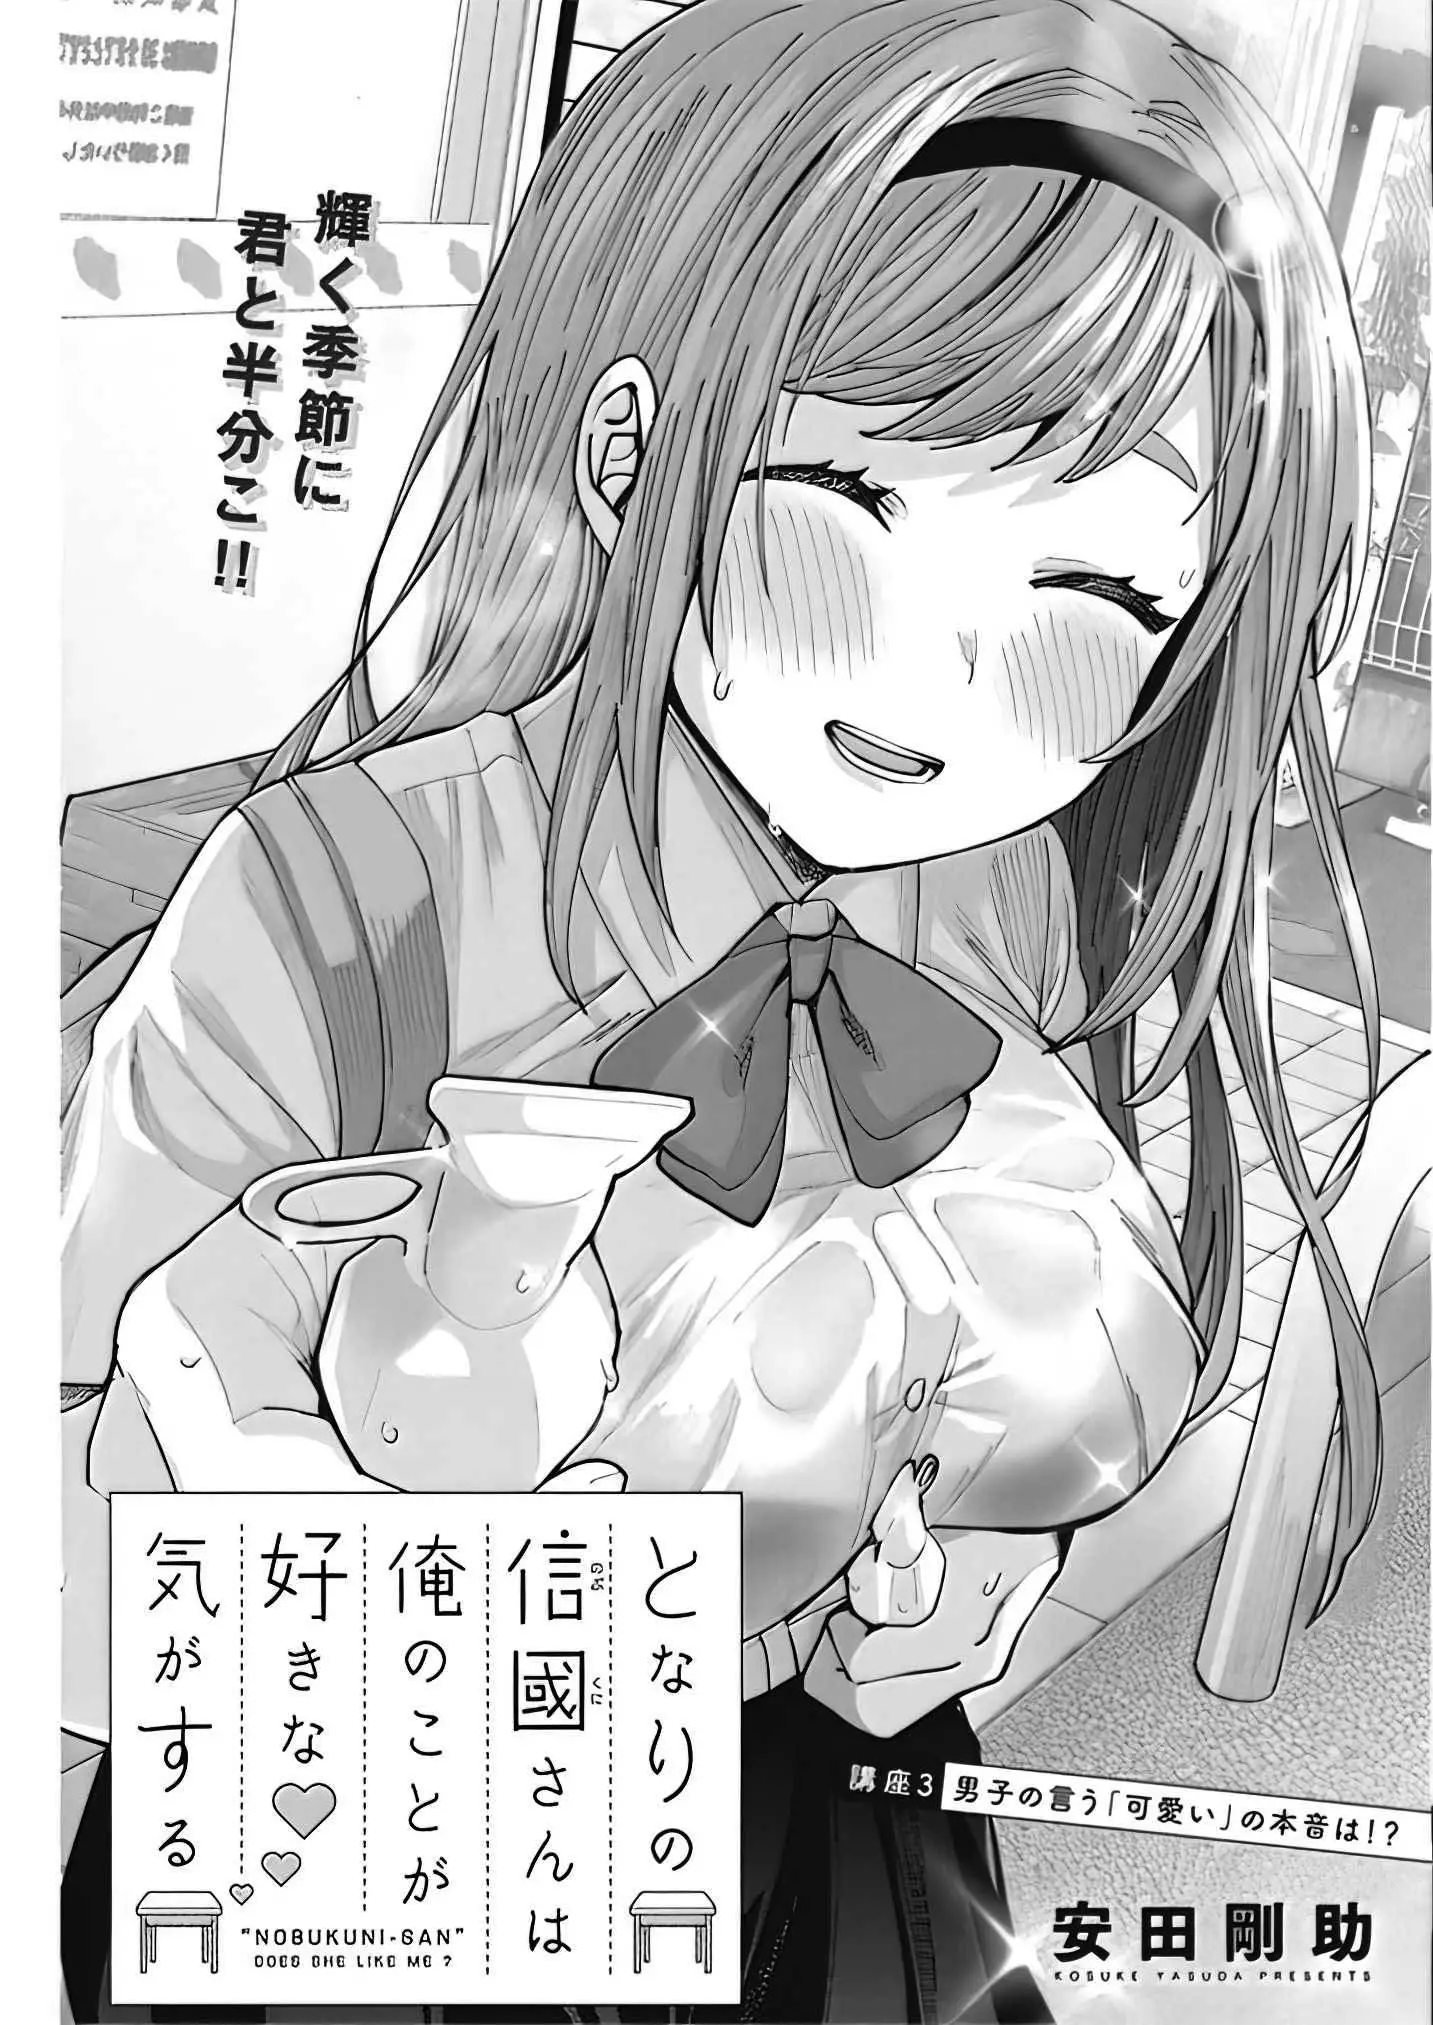 "nobukuni-San" Does She Like Me? - 3 page 2